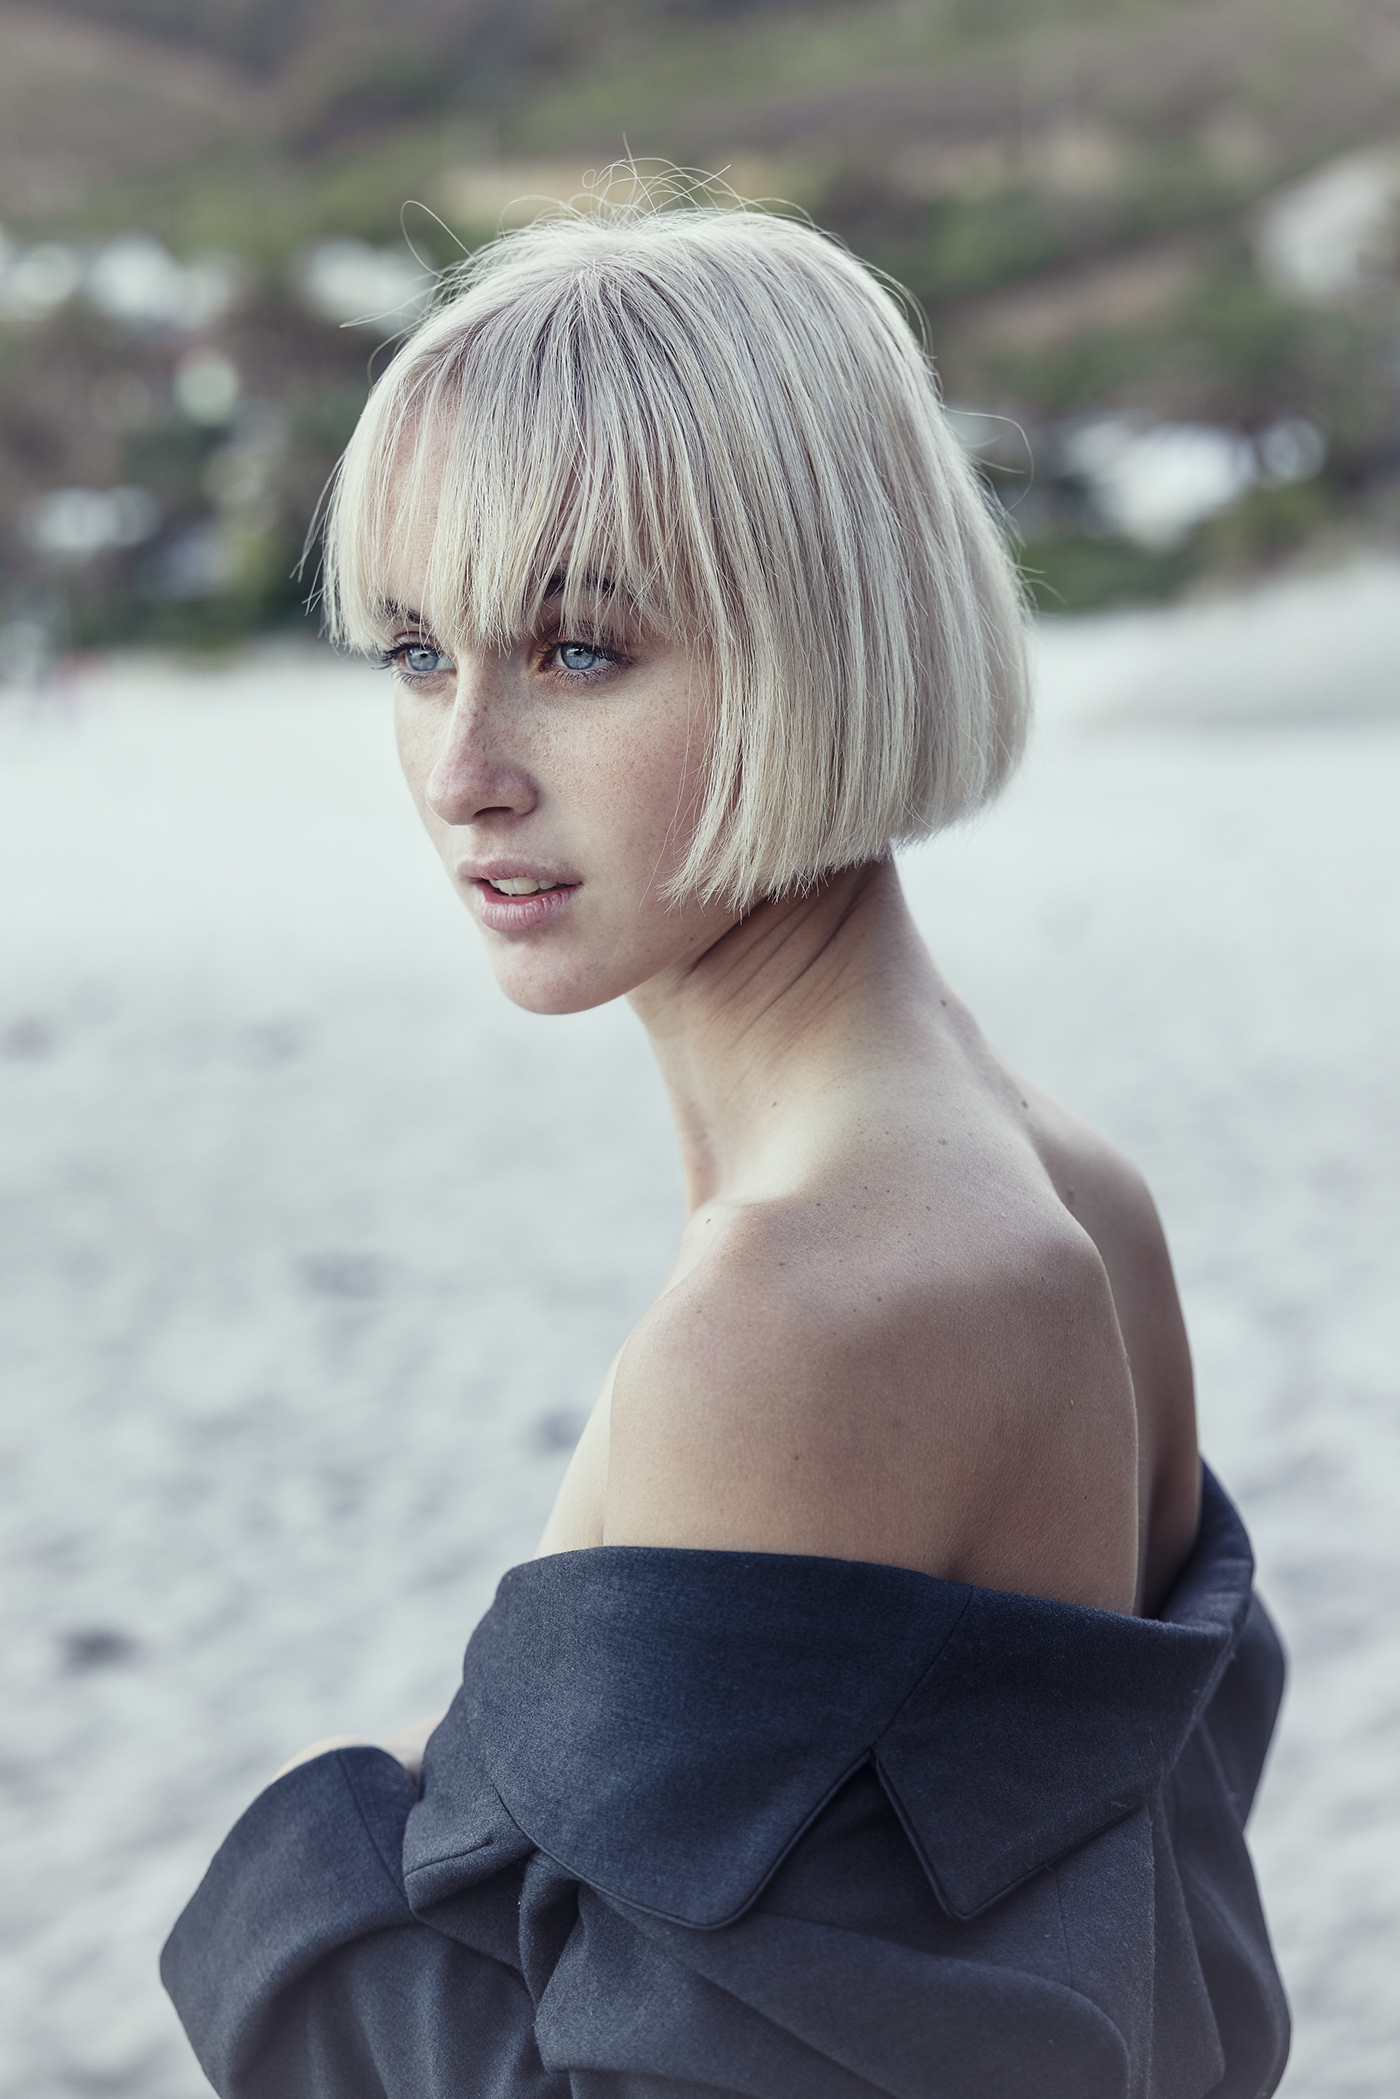 cape town model Fashion  beach photoshoot editorial blonde girls woman beauty